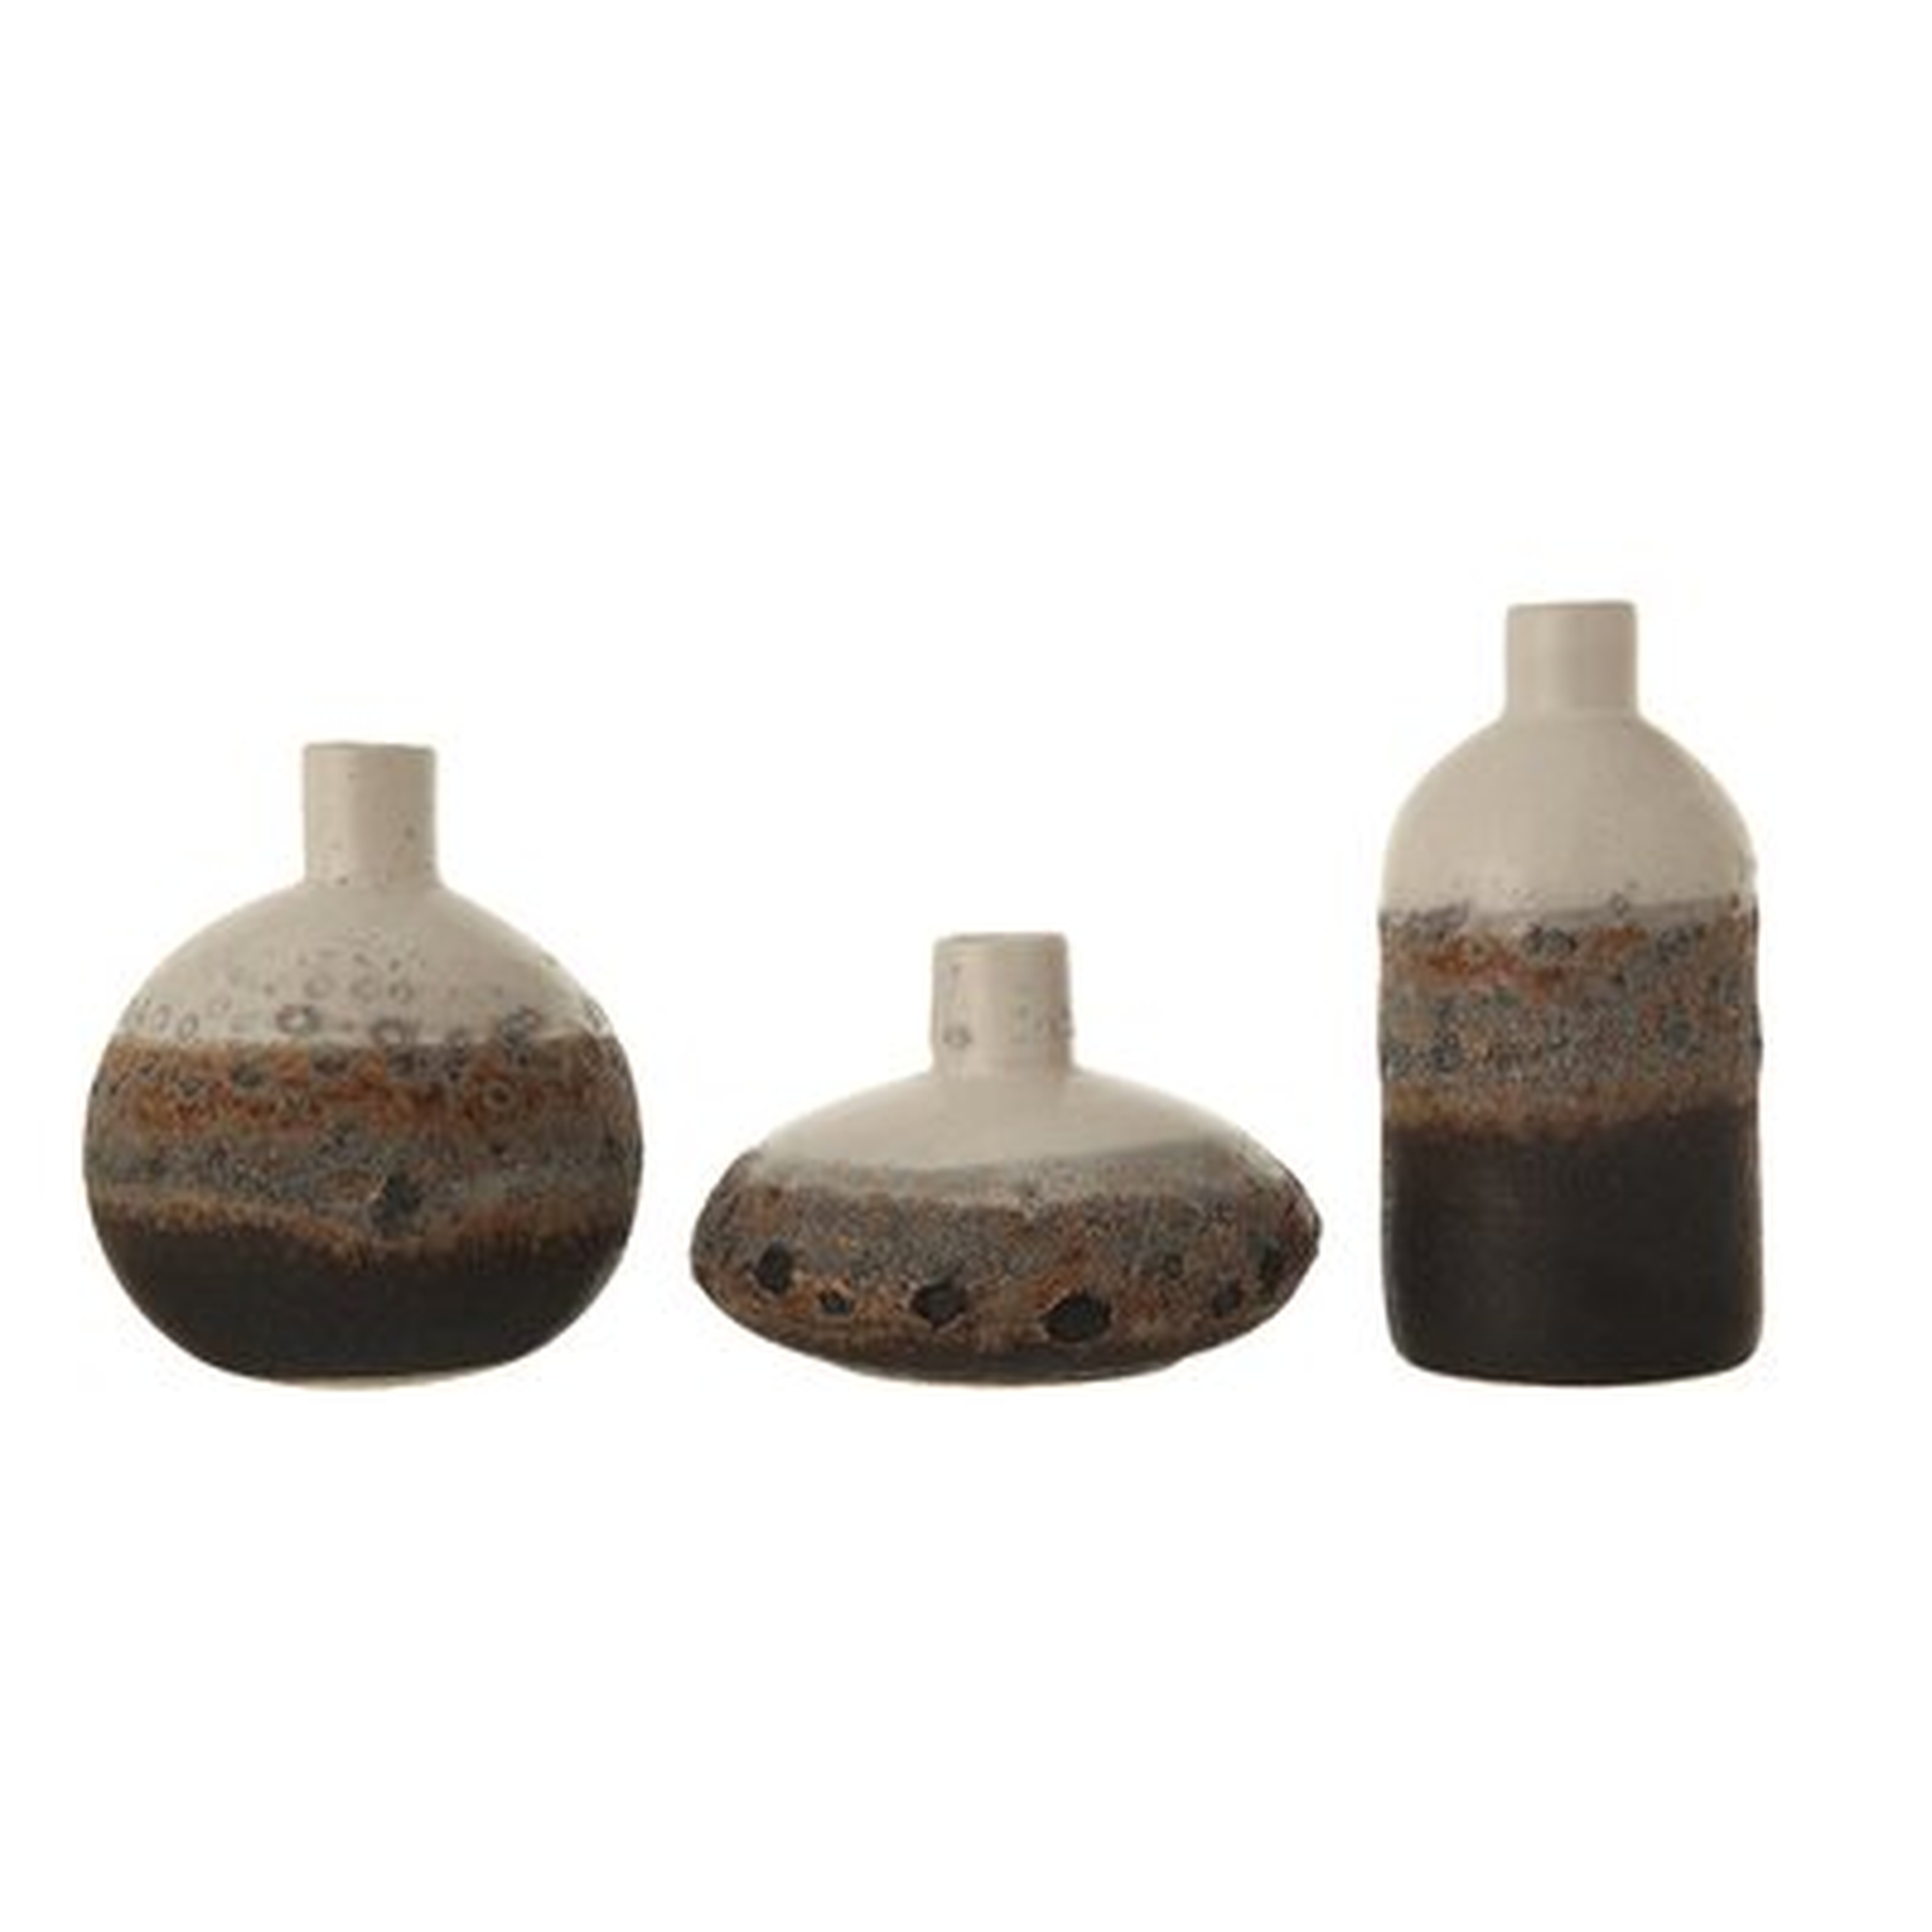 Textured Brown & White Stoneware Vase with Ombre Reactive Glaze Finish (Set of 3 Sizes) - Wayfair